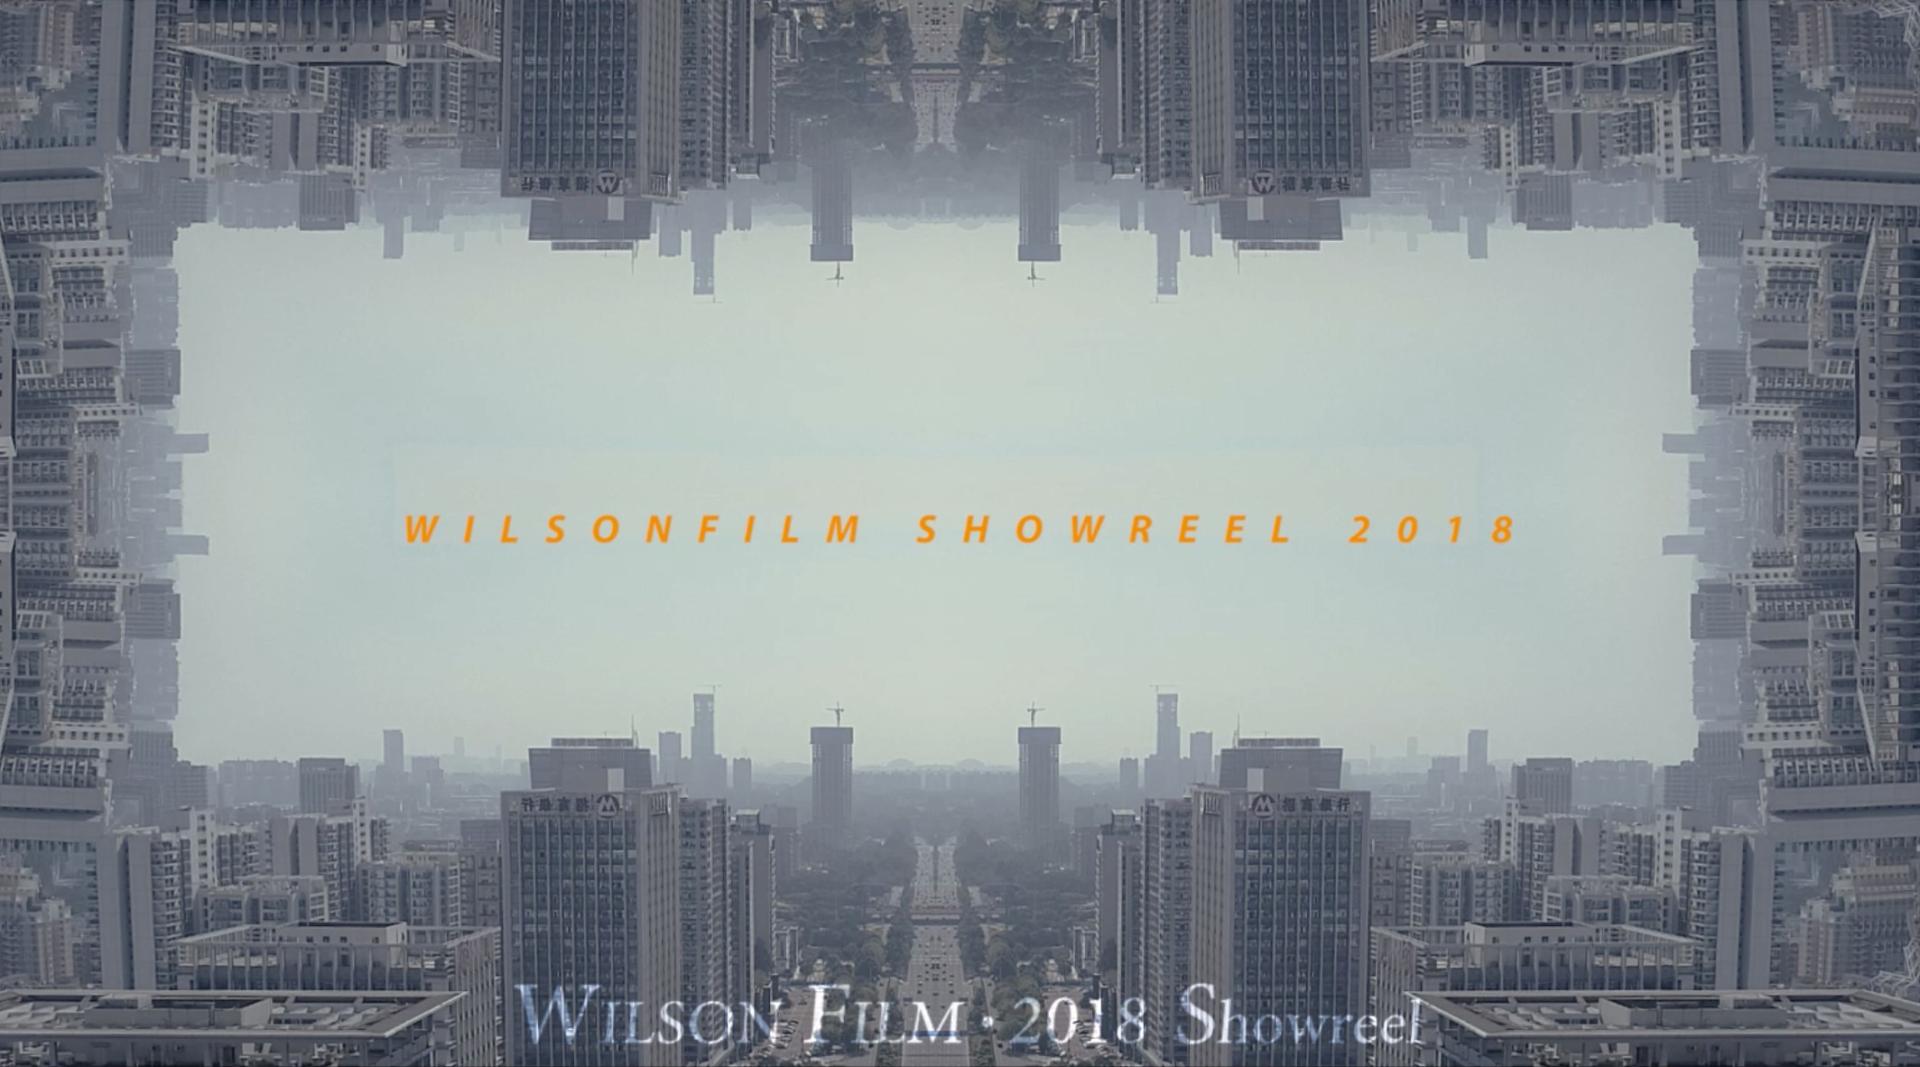 Wilson Film 2018 Showreel